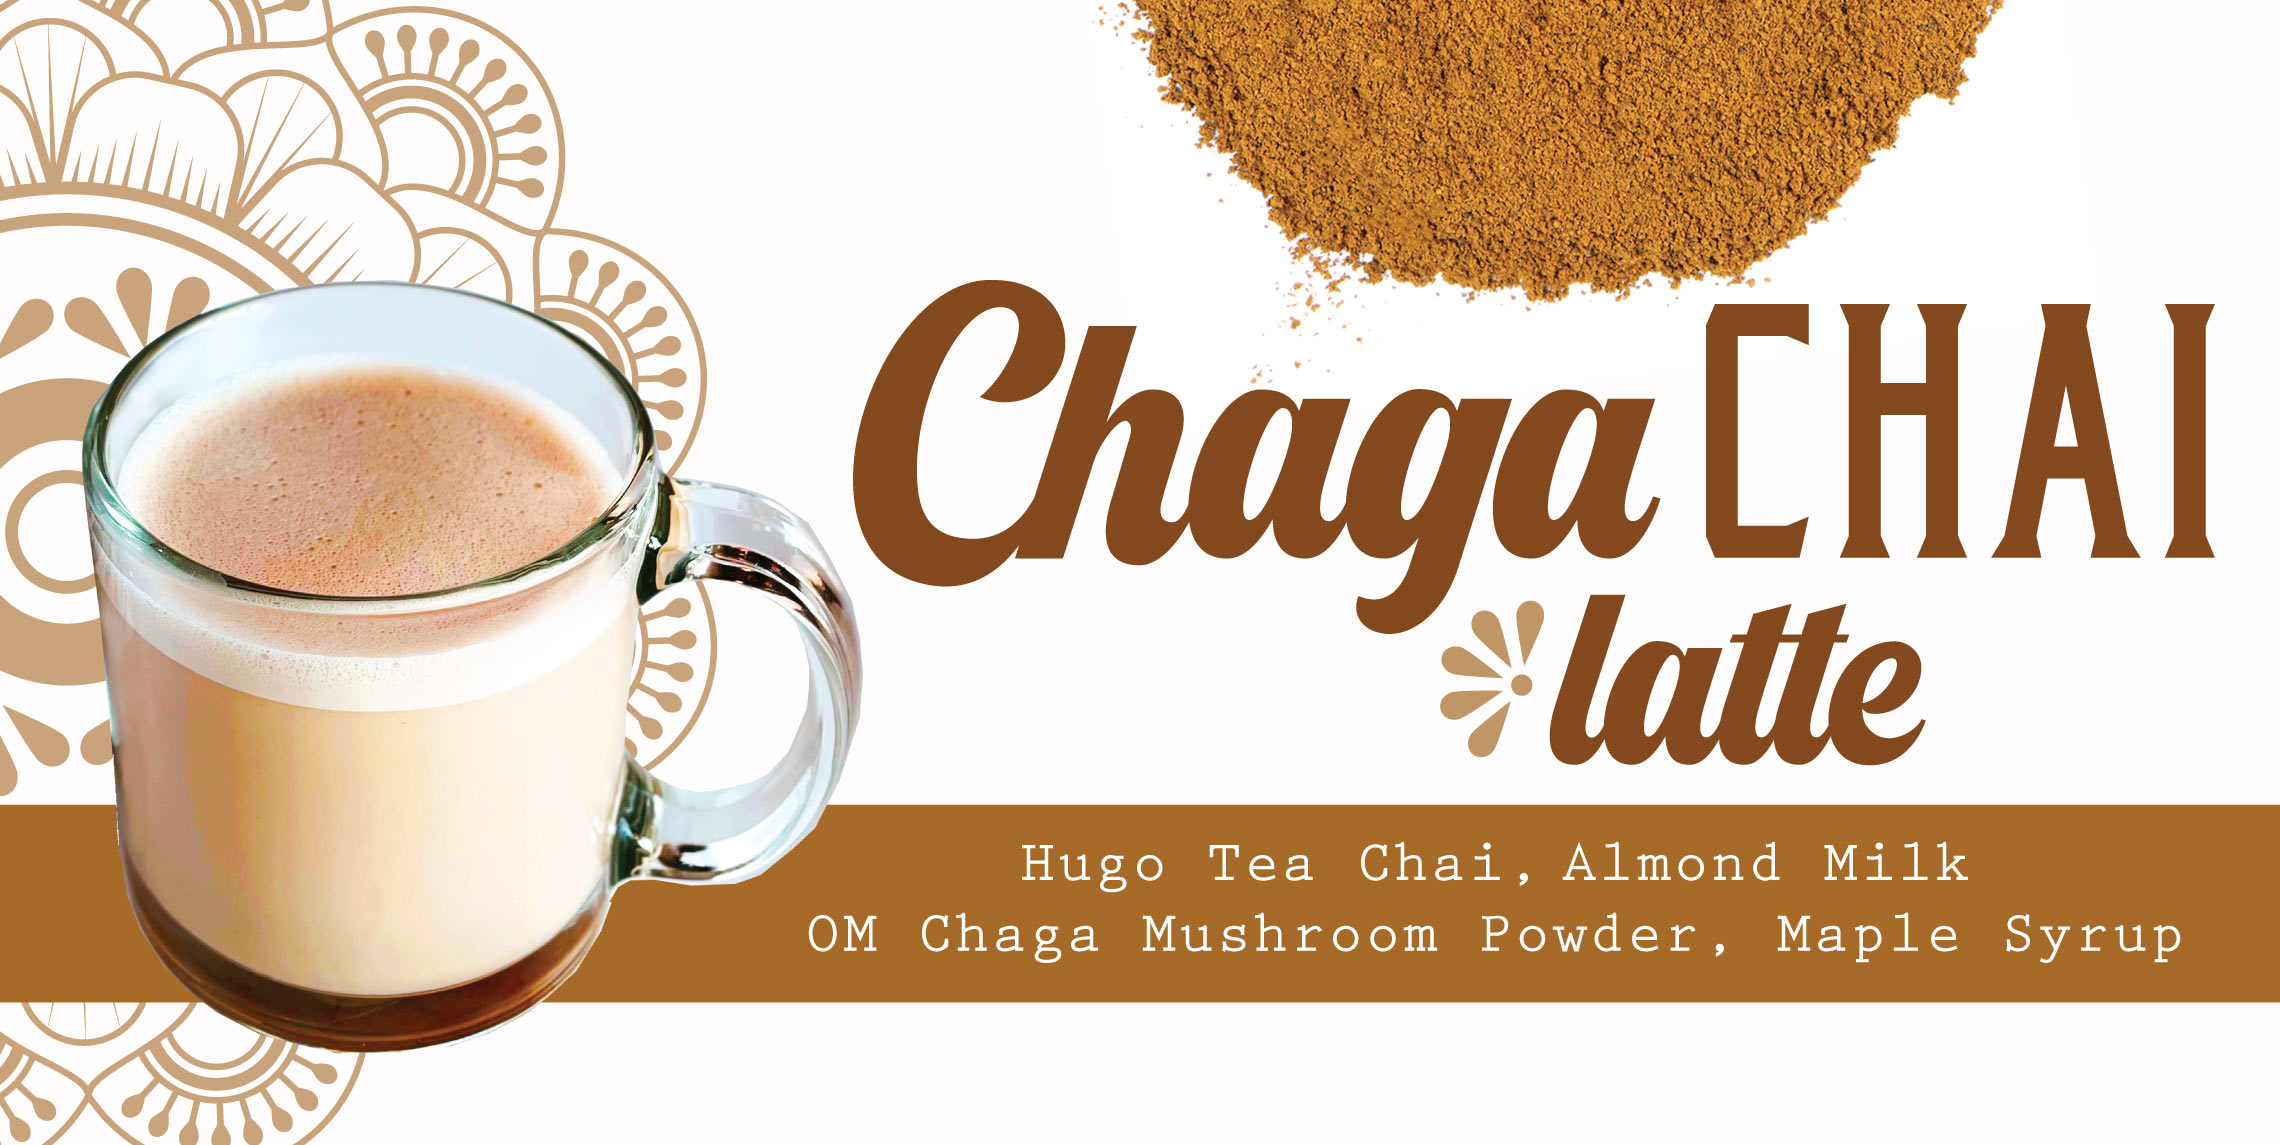 Chaga Chai Latte